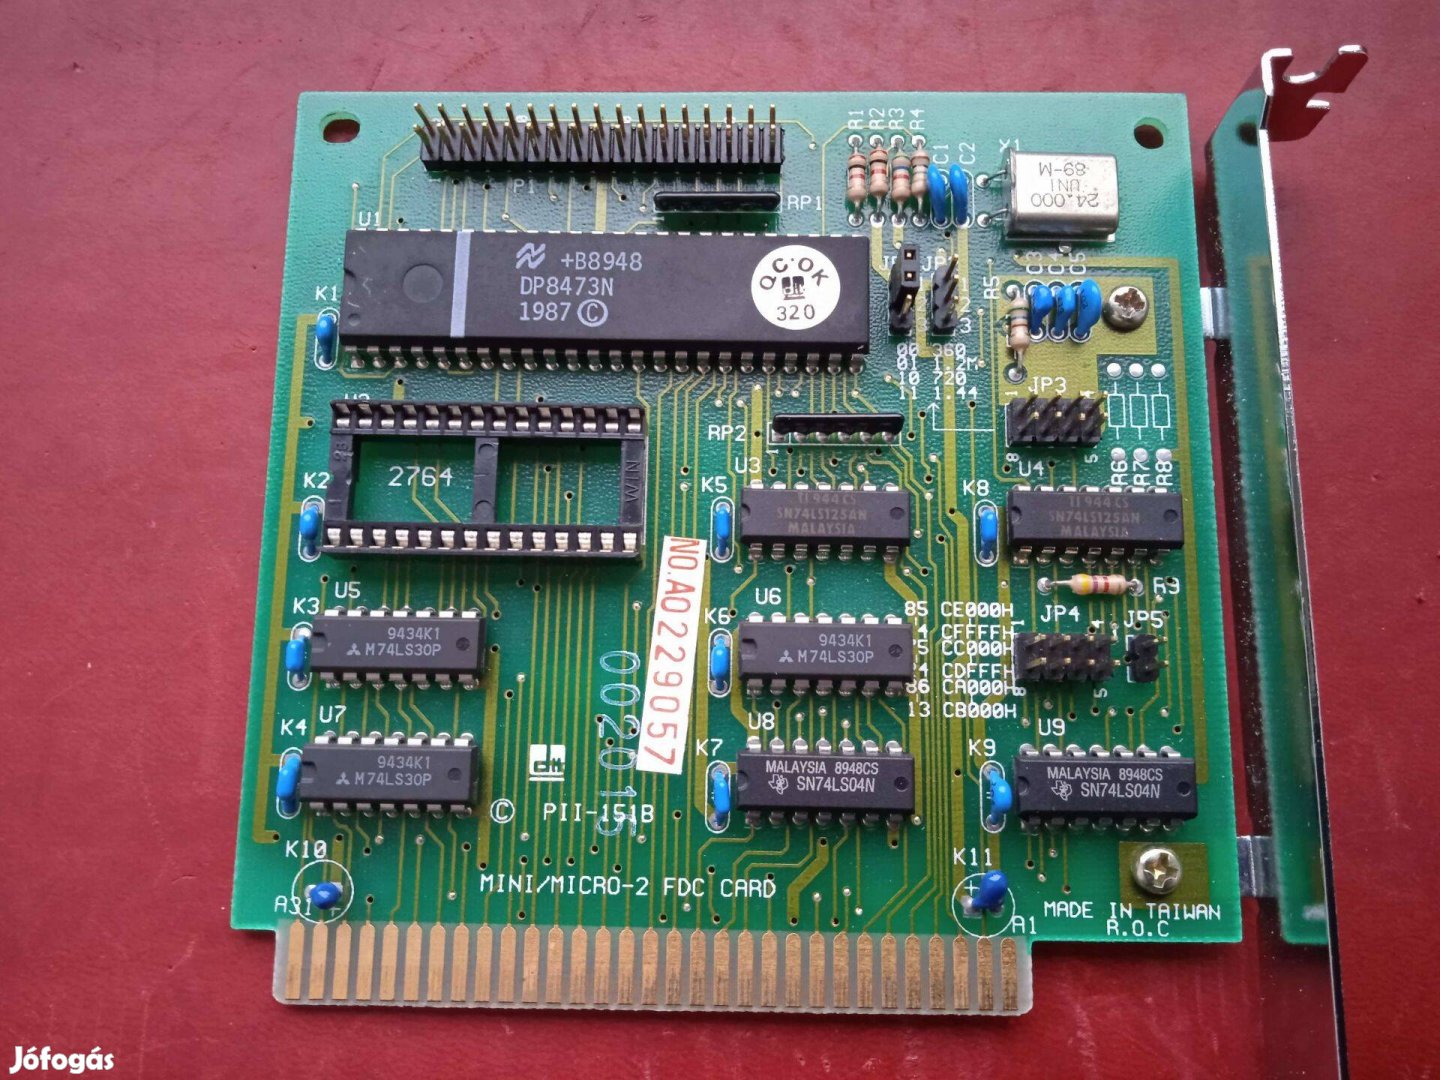 Generic Pii-151B-Used PCB Board Minimicro-2 FDC Card